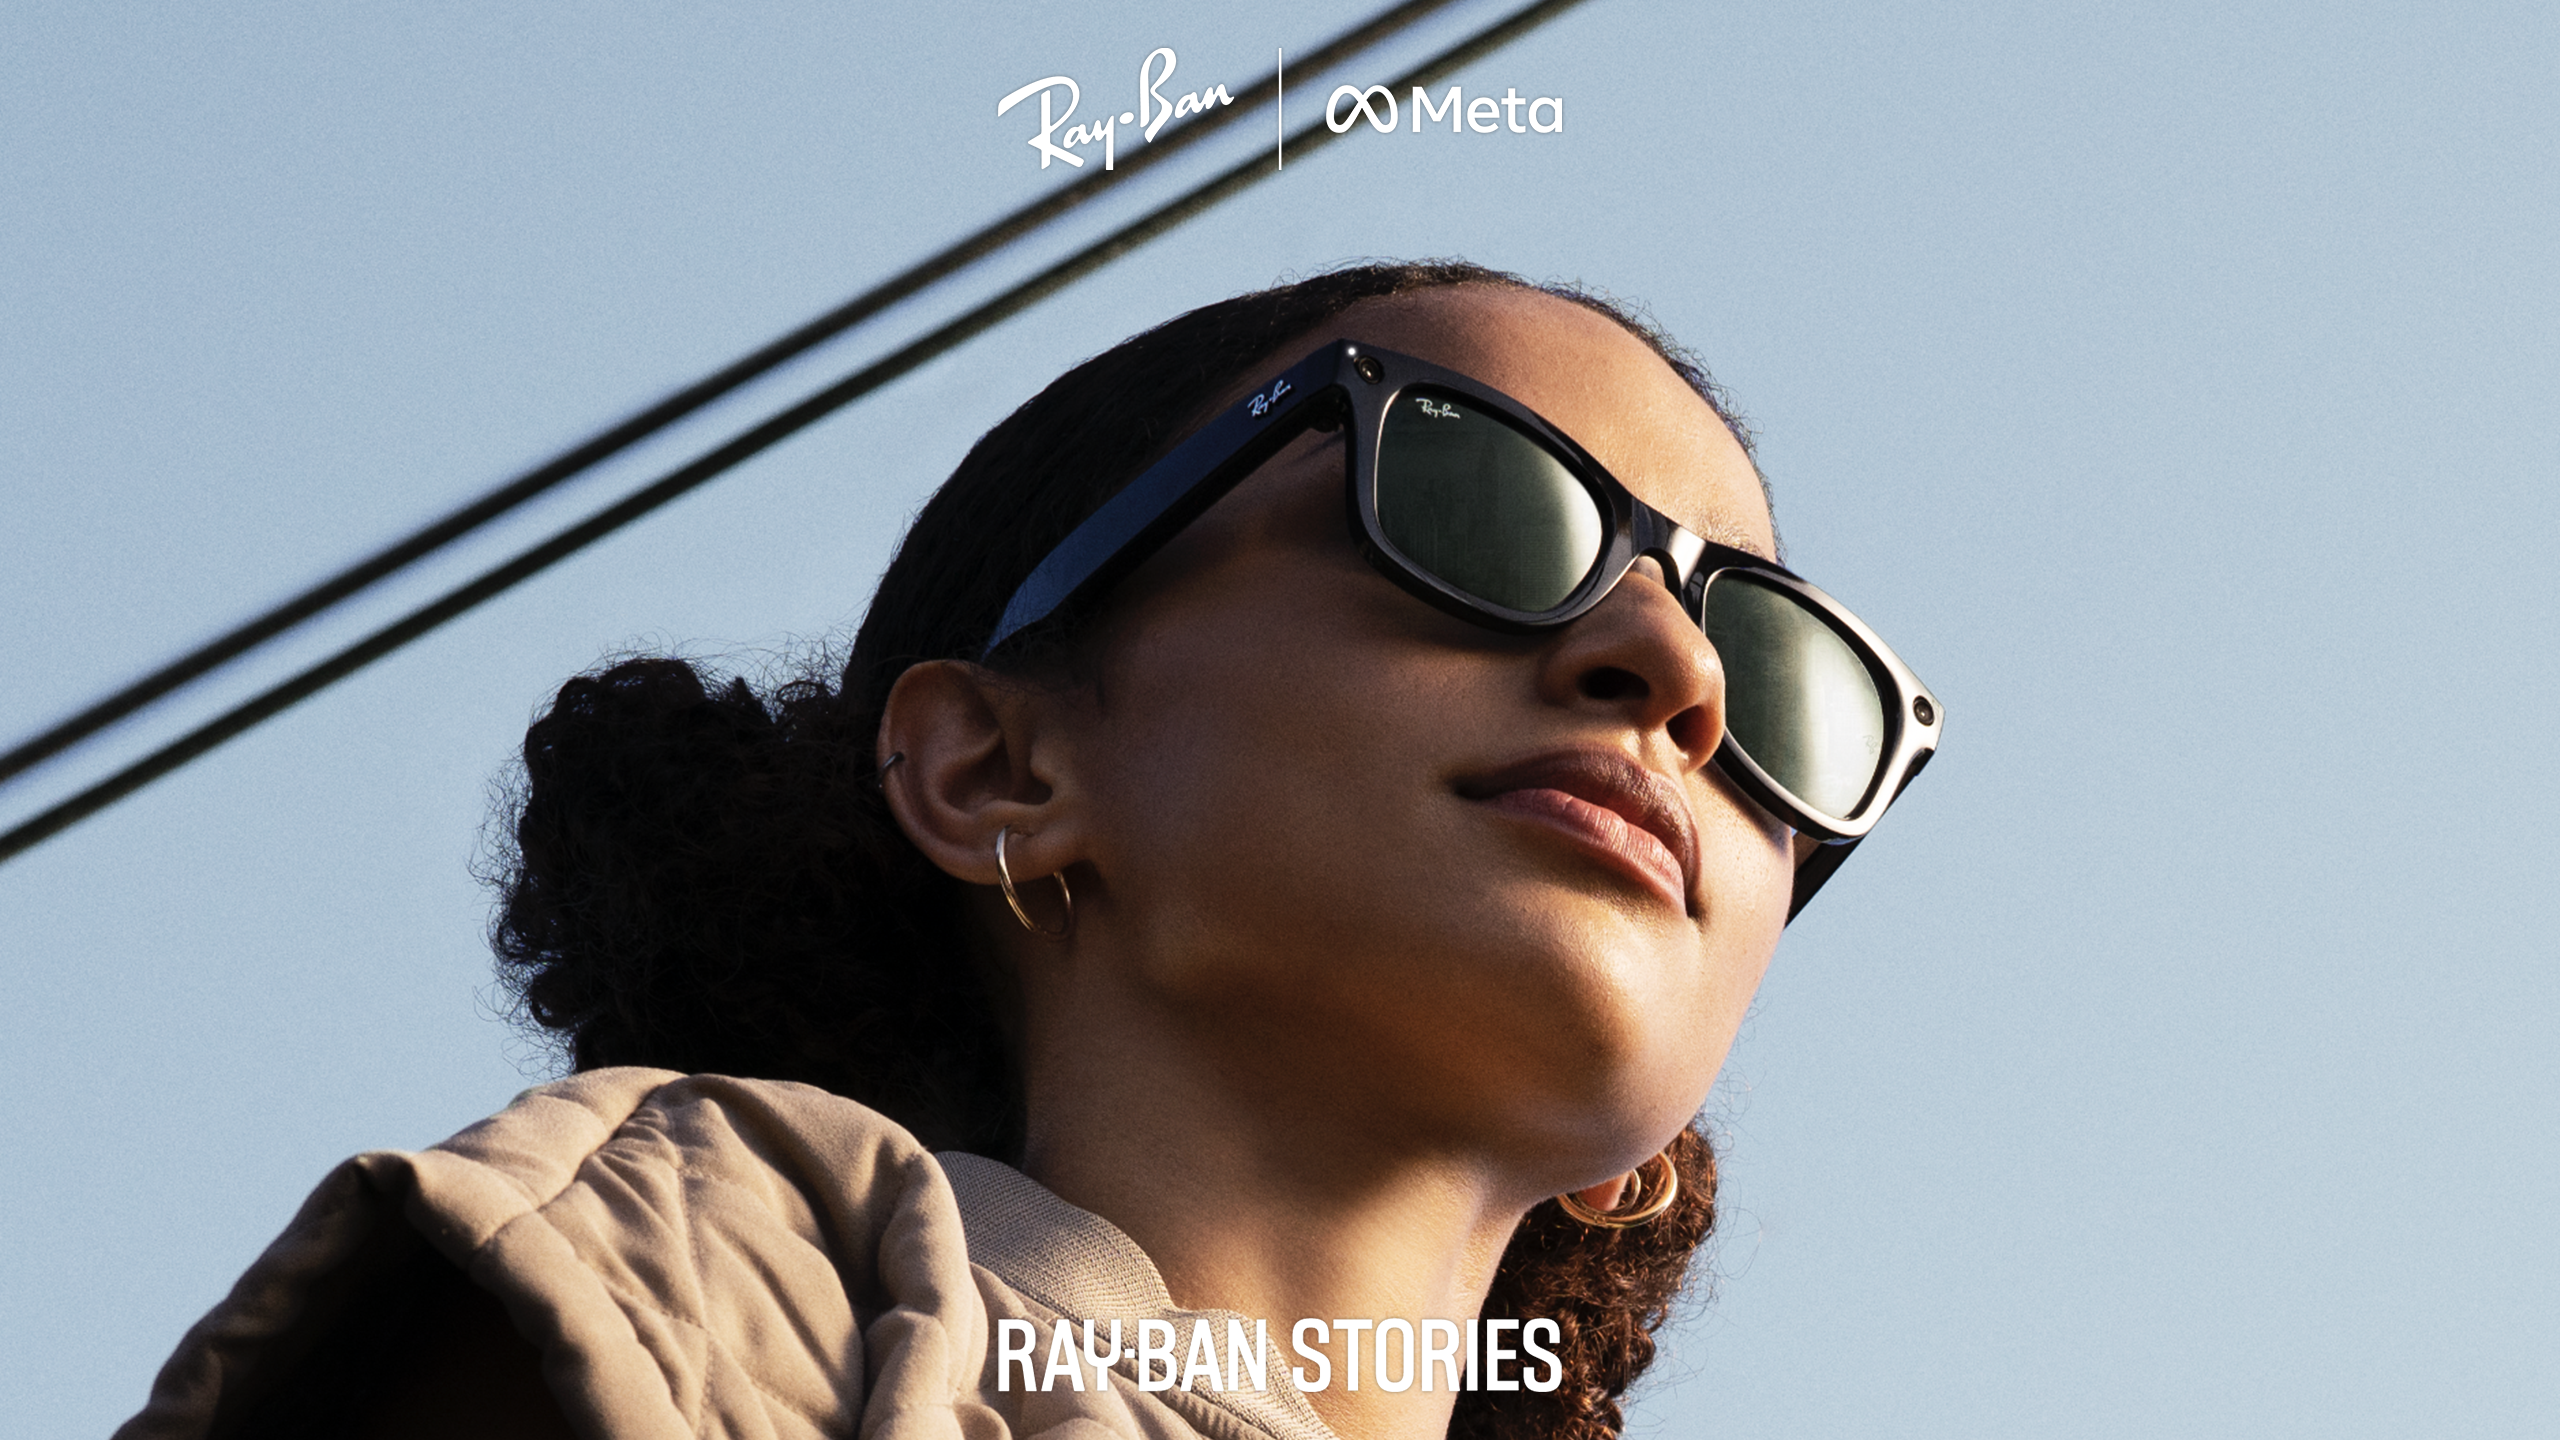 Ray-Ban & Meta create photo-capturing smart glasses | CNN Underscored